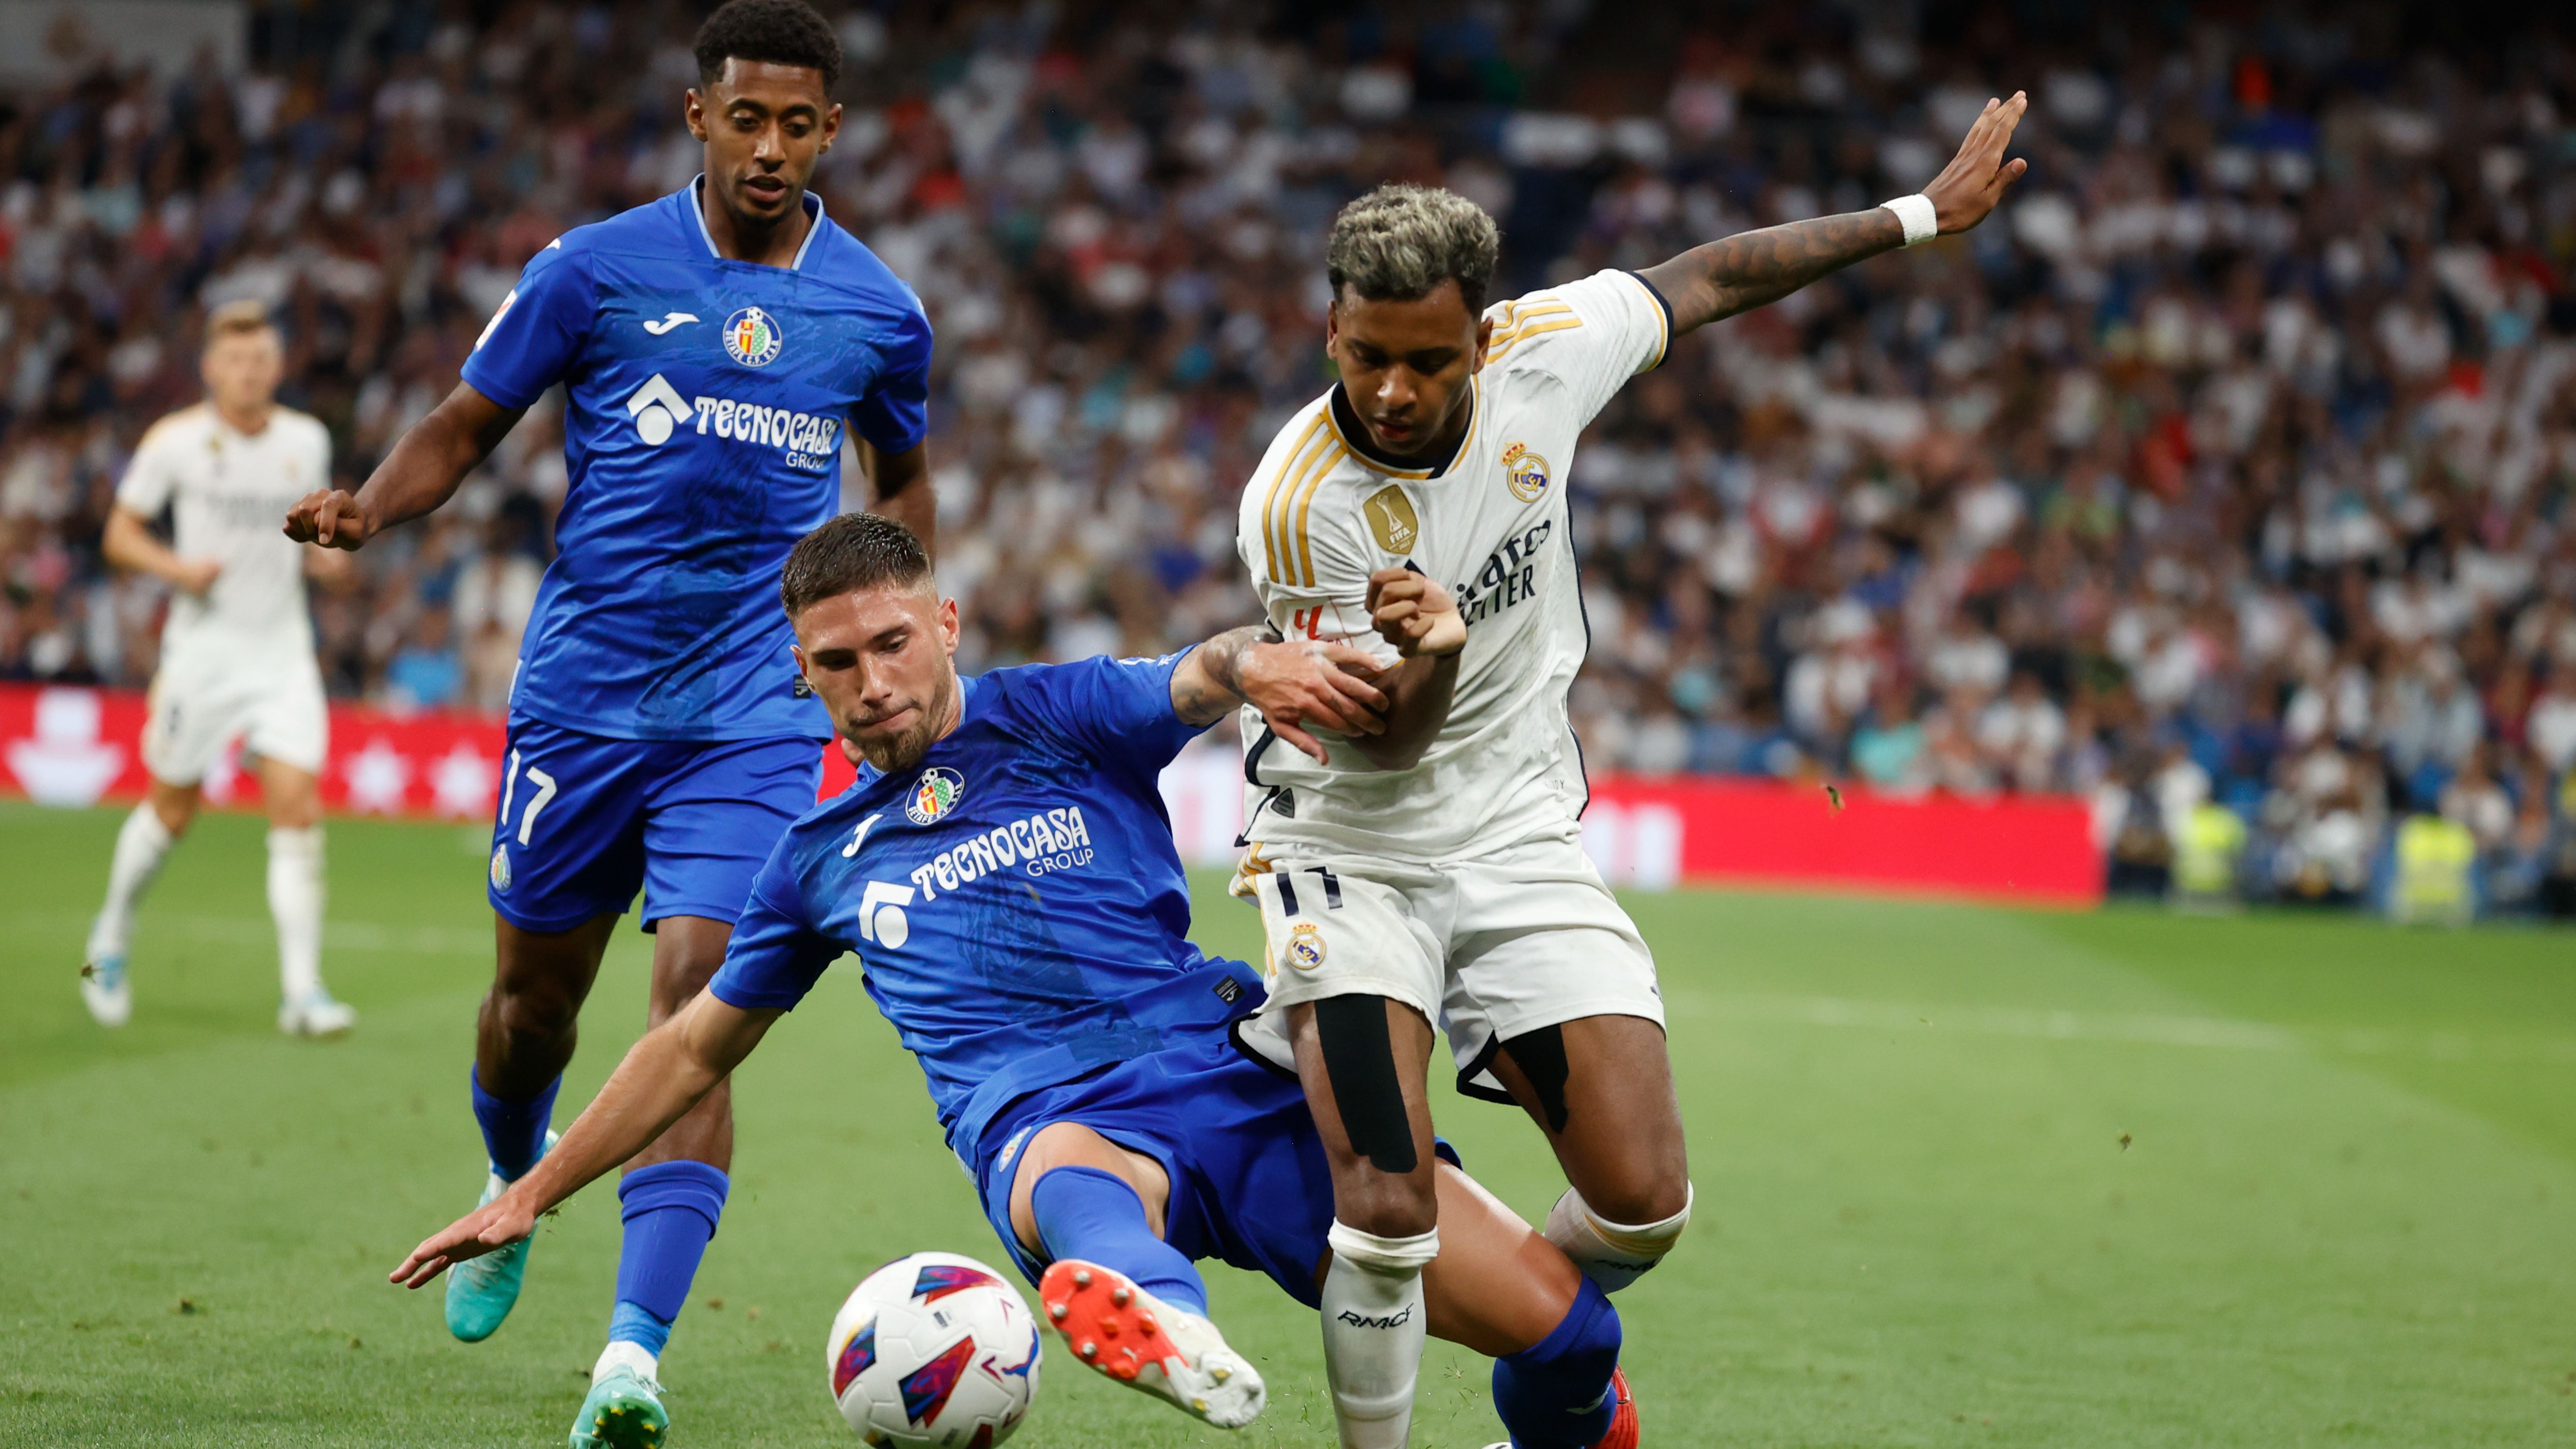 Getafe – Real Madrid, live broadcast